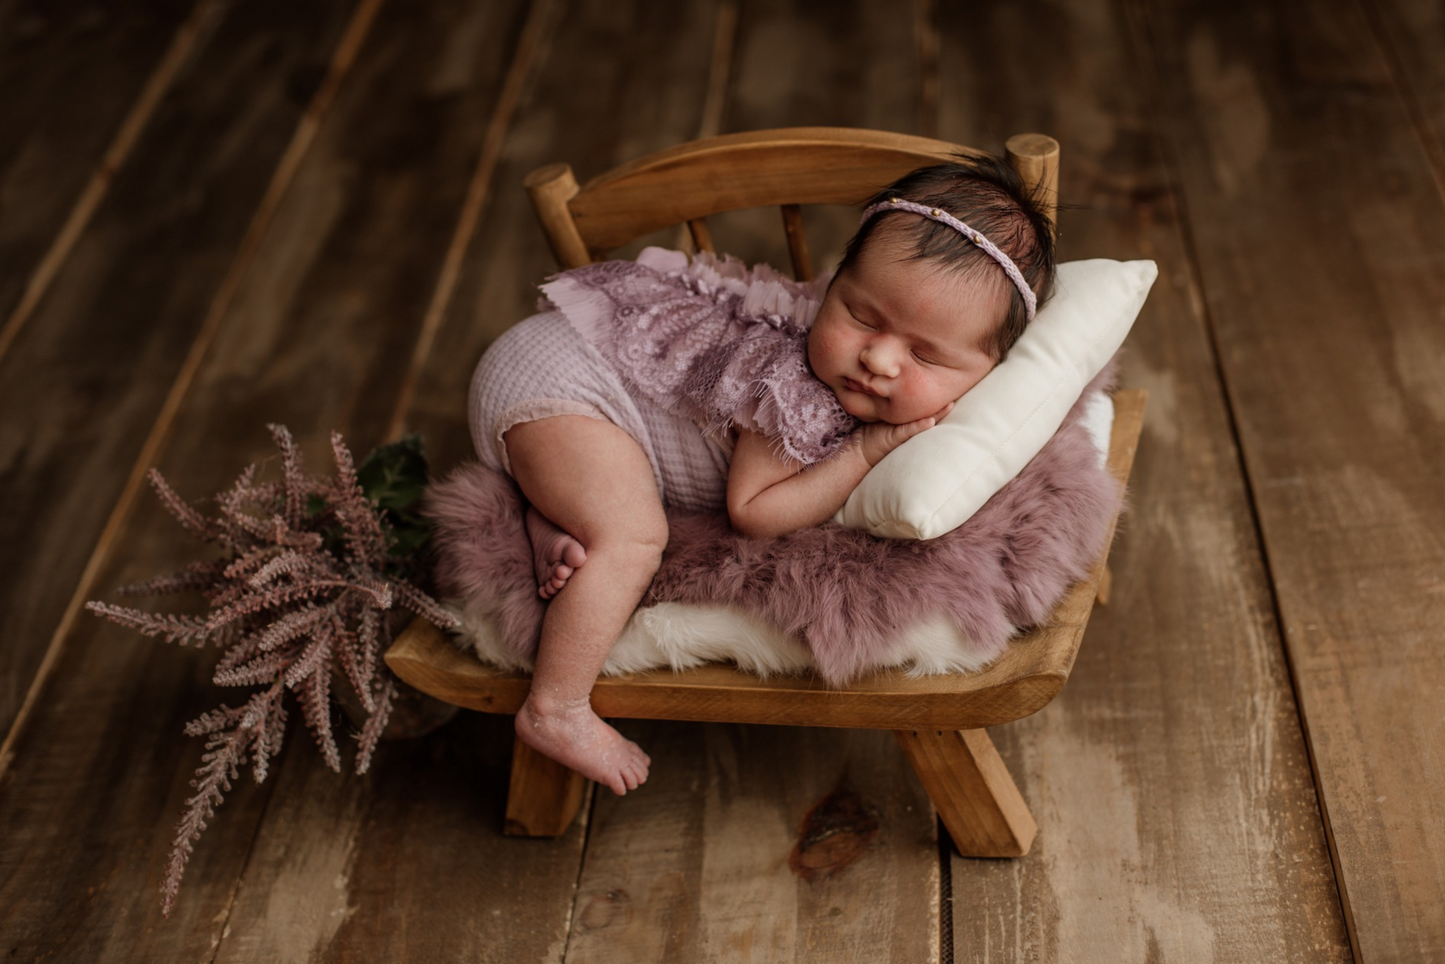 A serene newborn asleep on a fur-draped wooden prop chair, a delicate headband adding charm to this newborn photography prop setup.